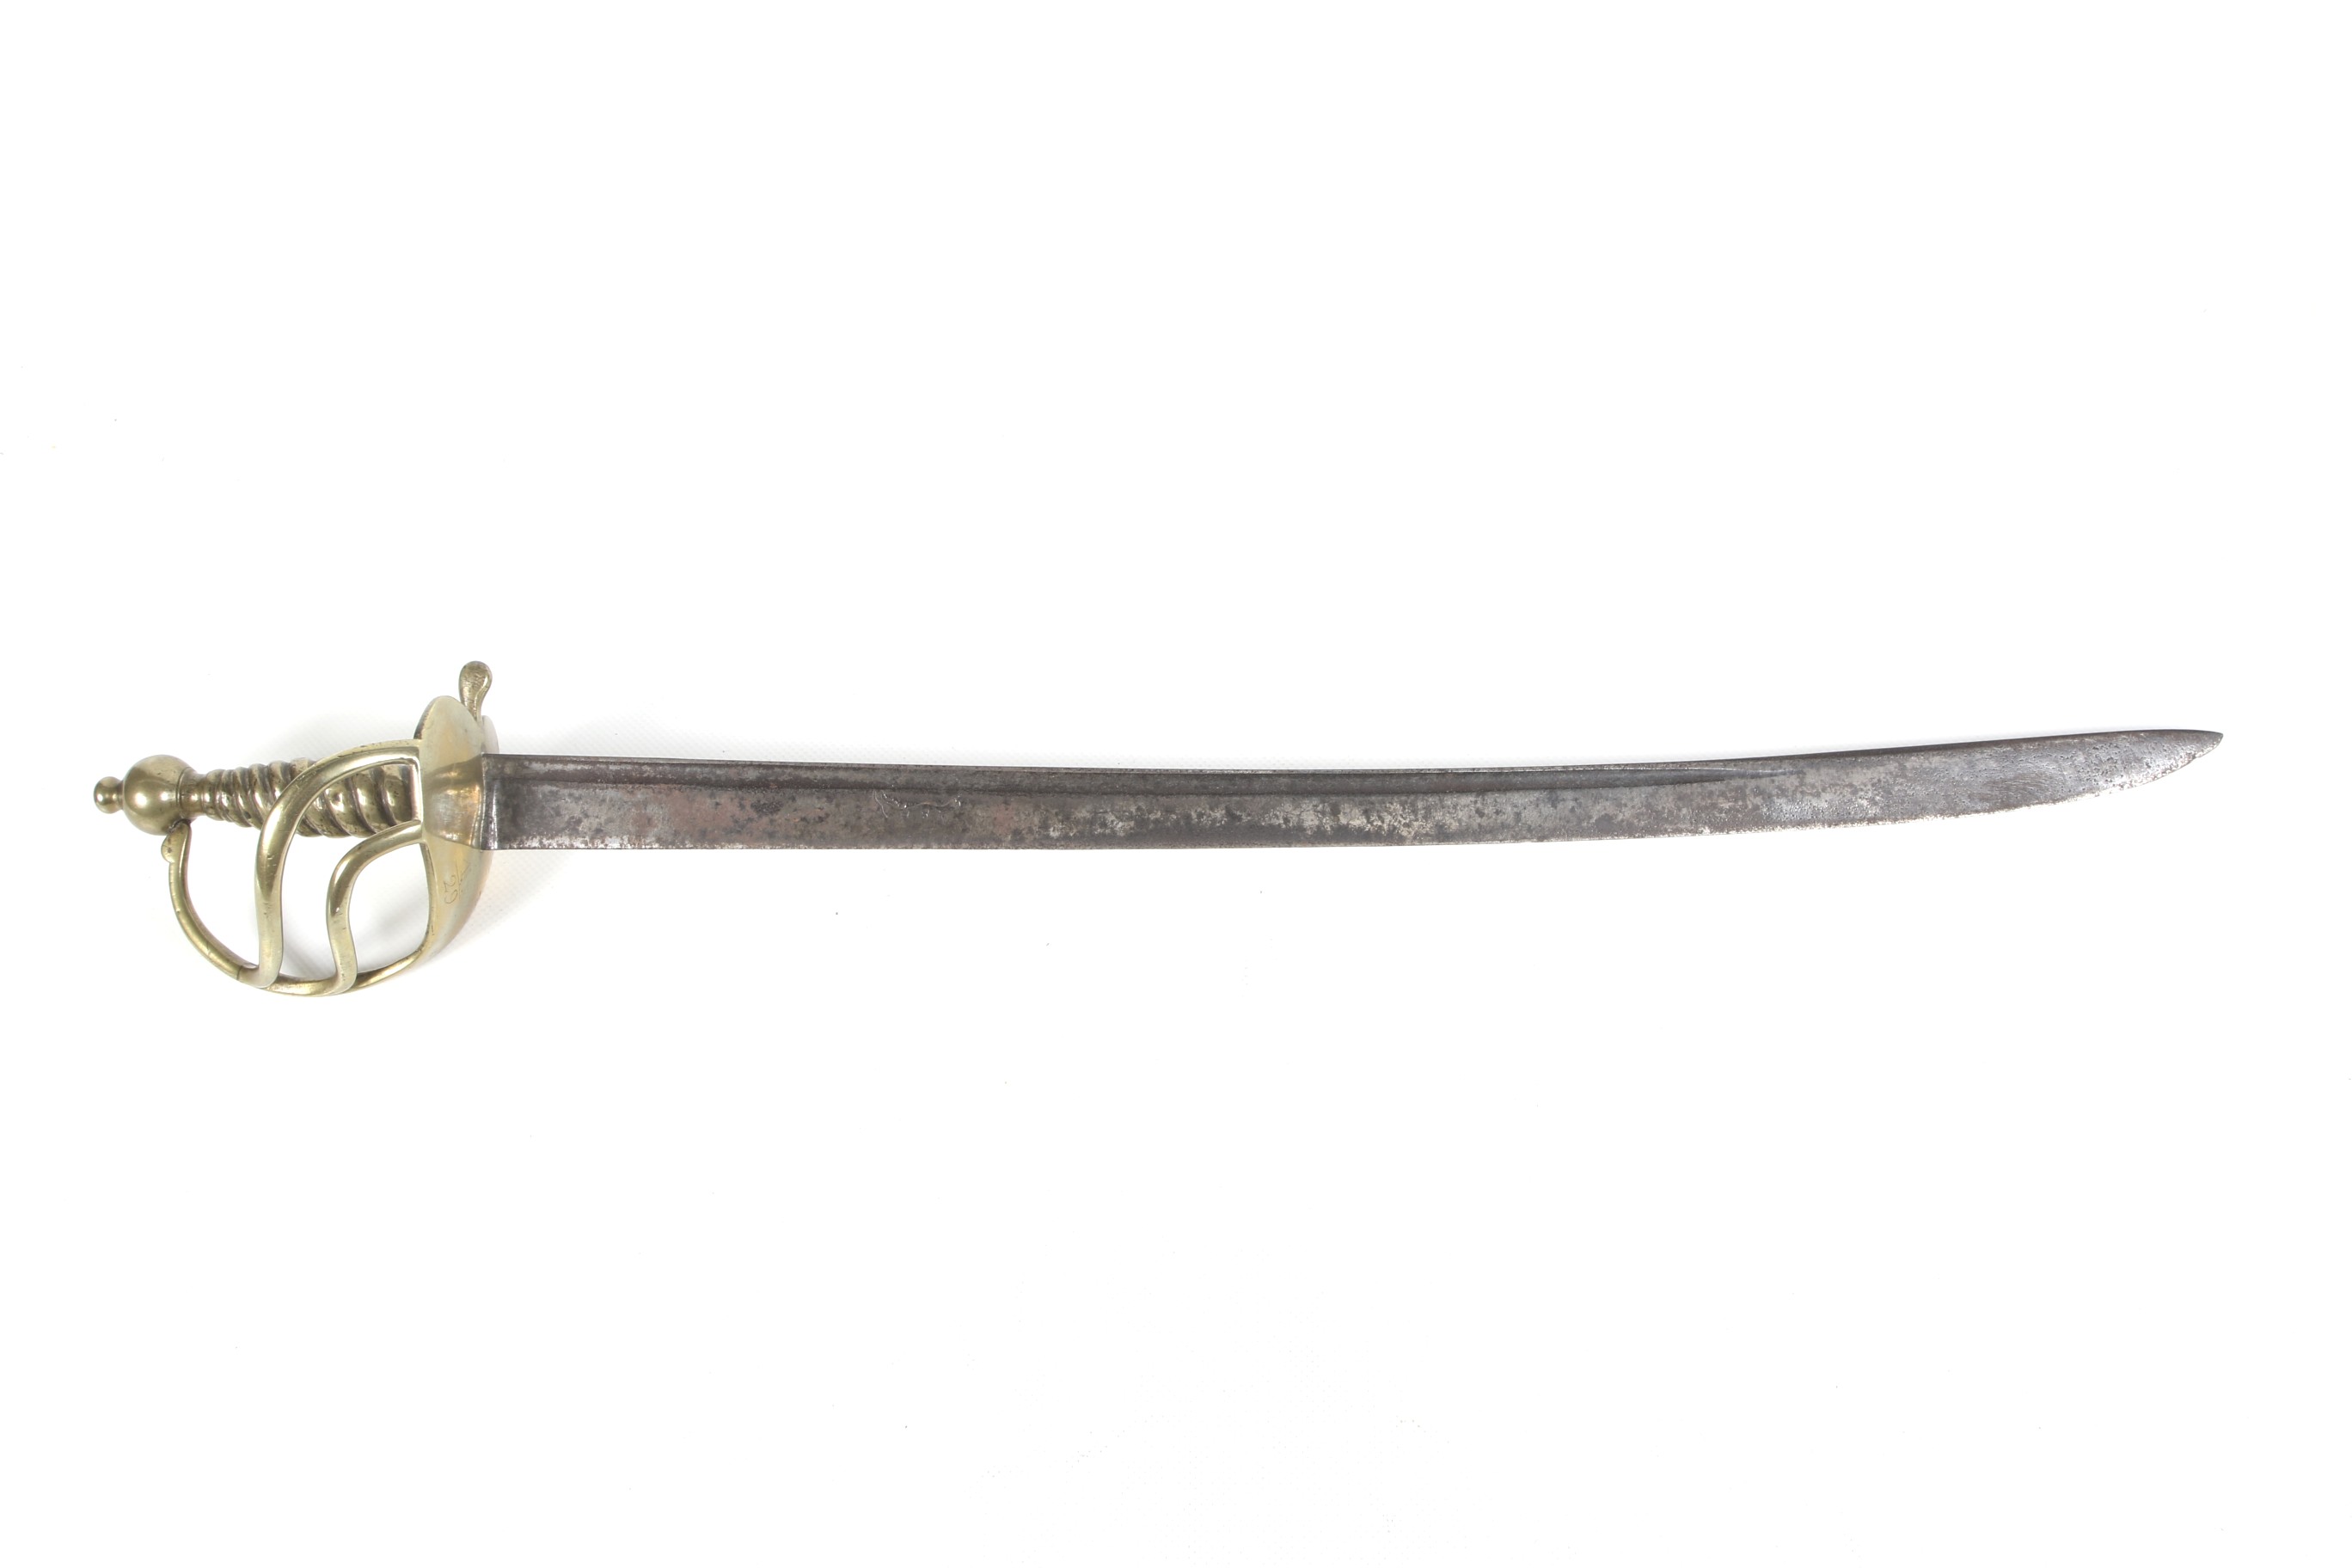 A mid-18th century brass hilted British Infantryman's sword.